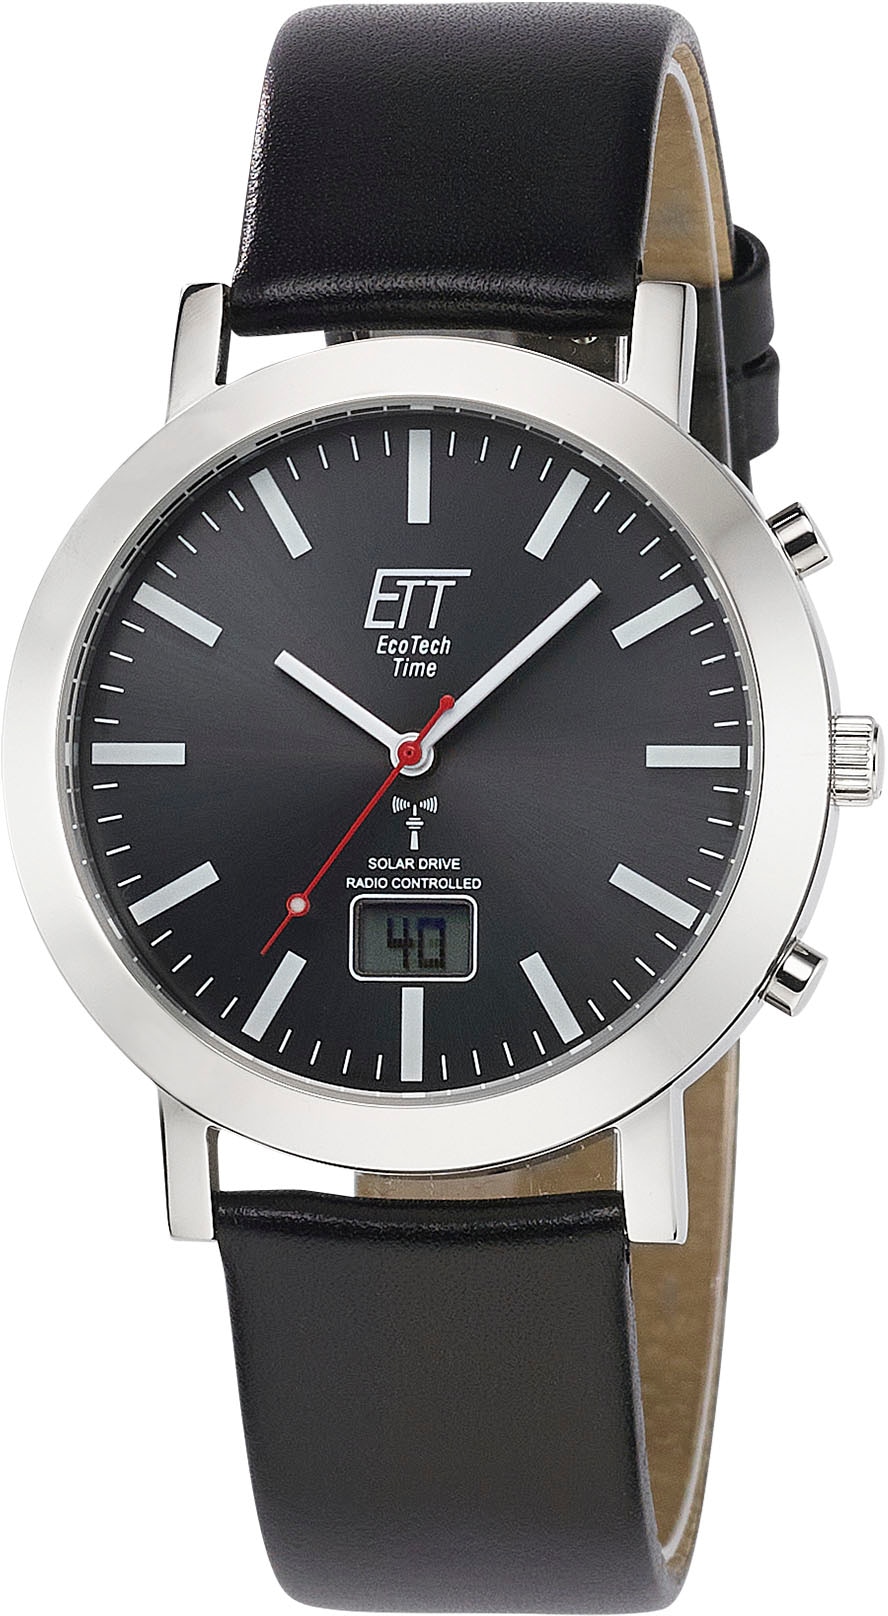 Funkuhr »Station Watch, EGS-11578-21L«, Armbanduhr, Herrenuhr, Datum, Solar